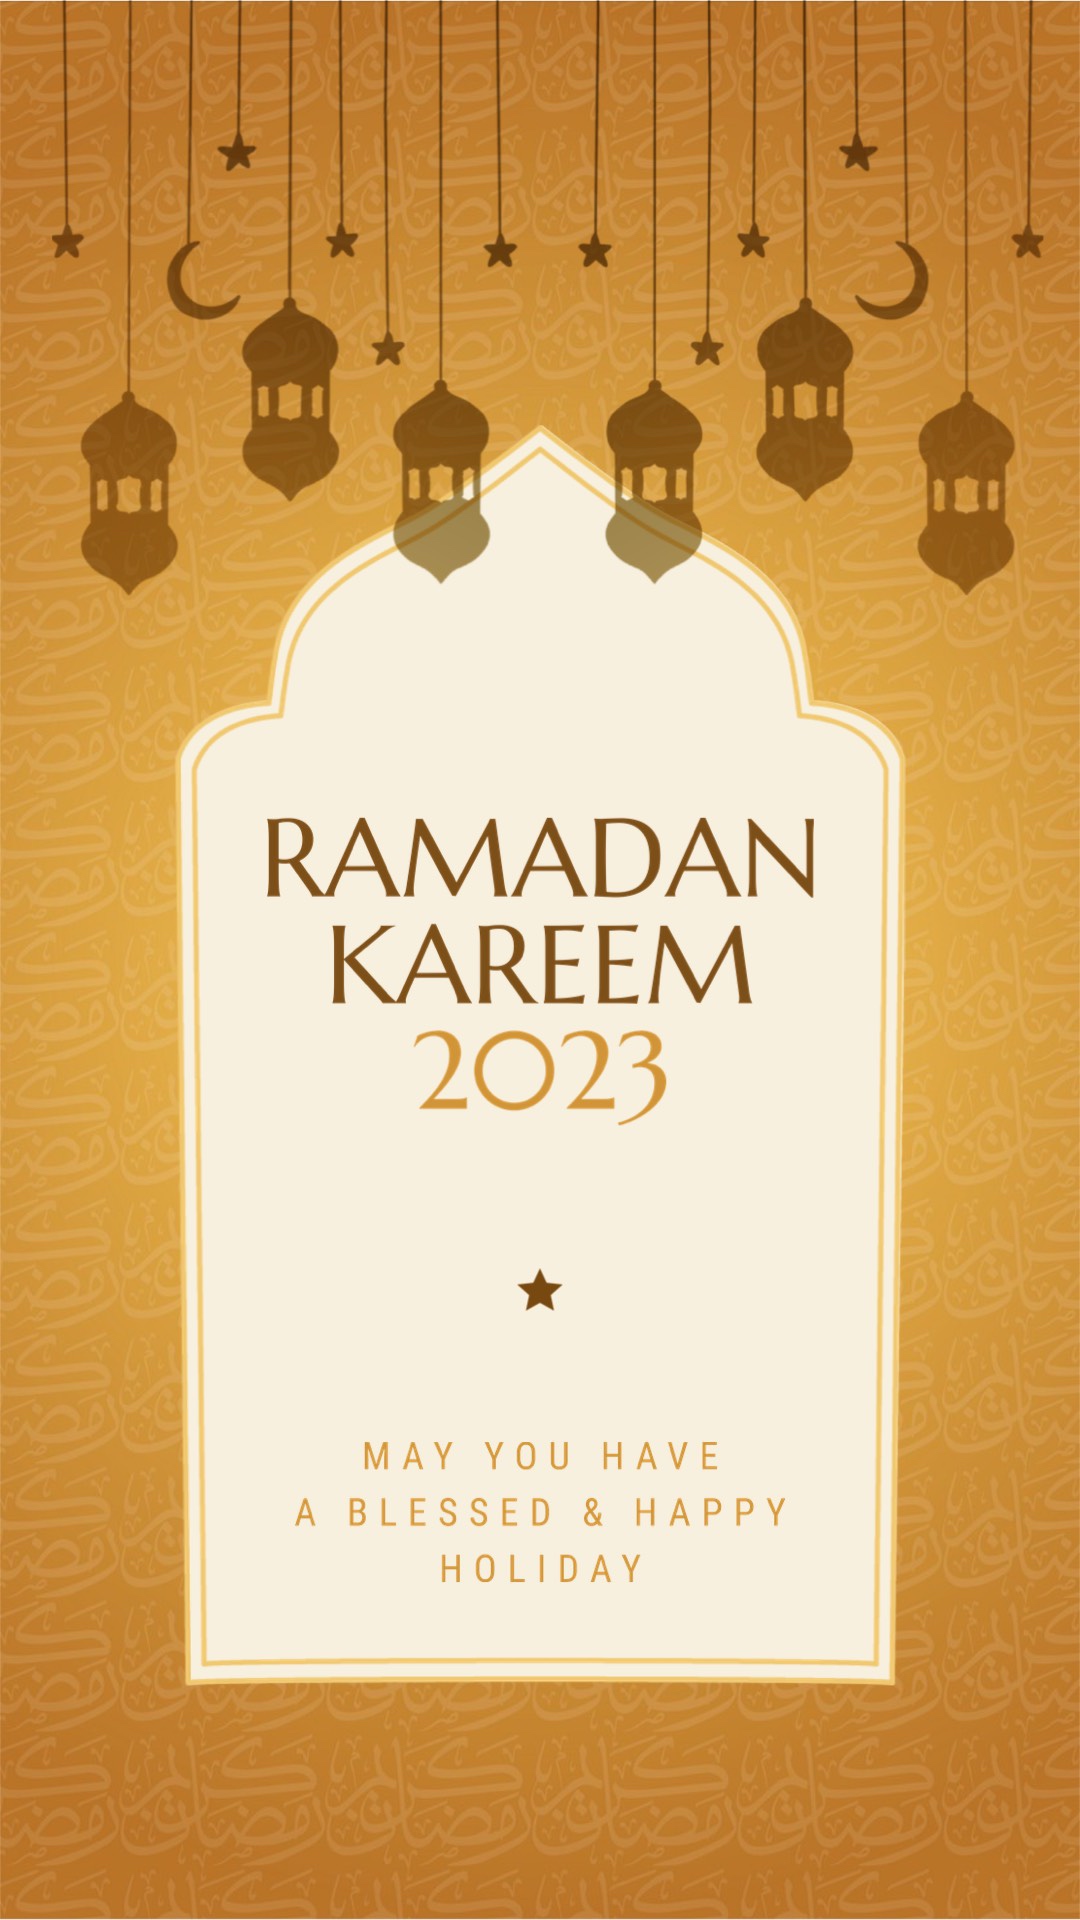 Ramadan kareem holiday gold greeting instagram story template 